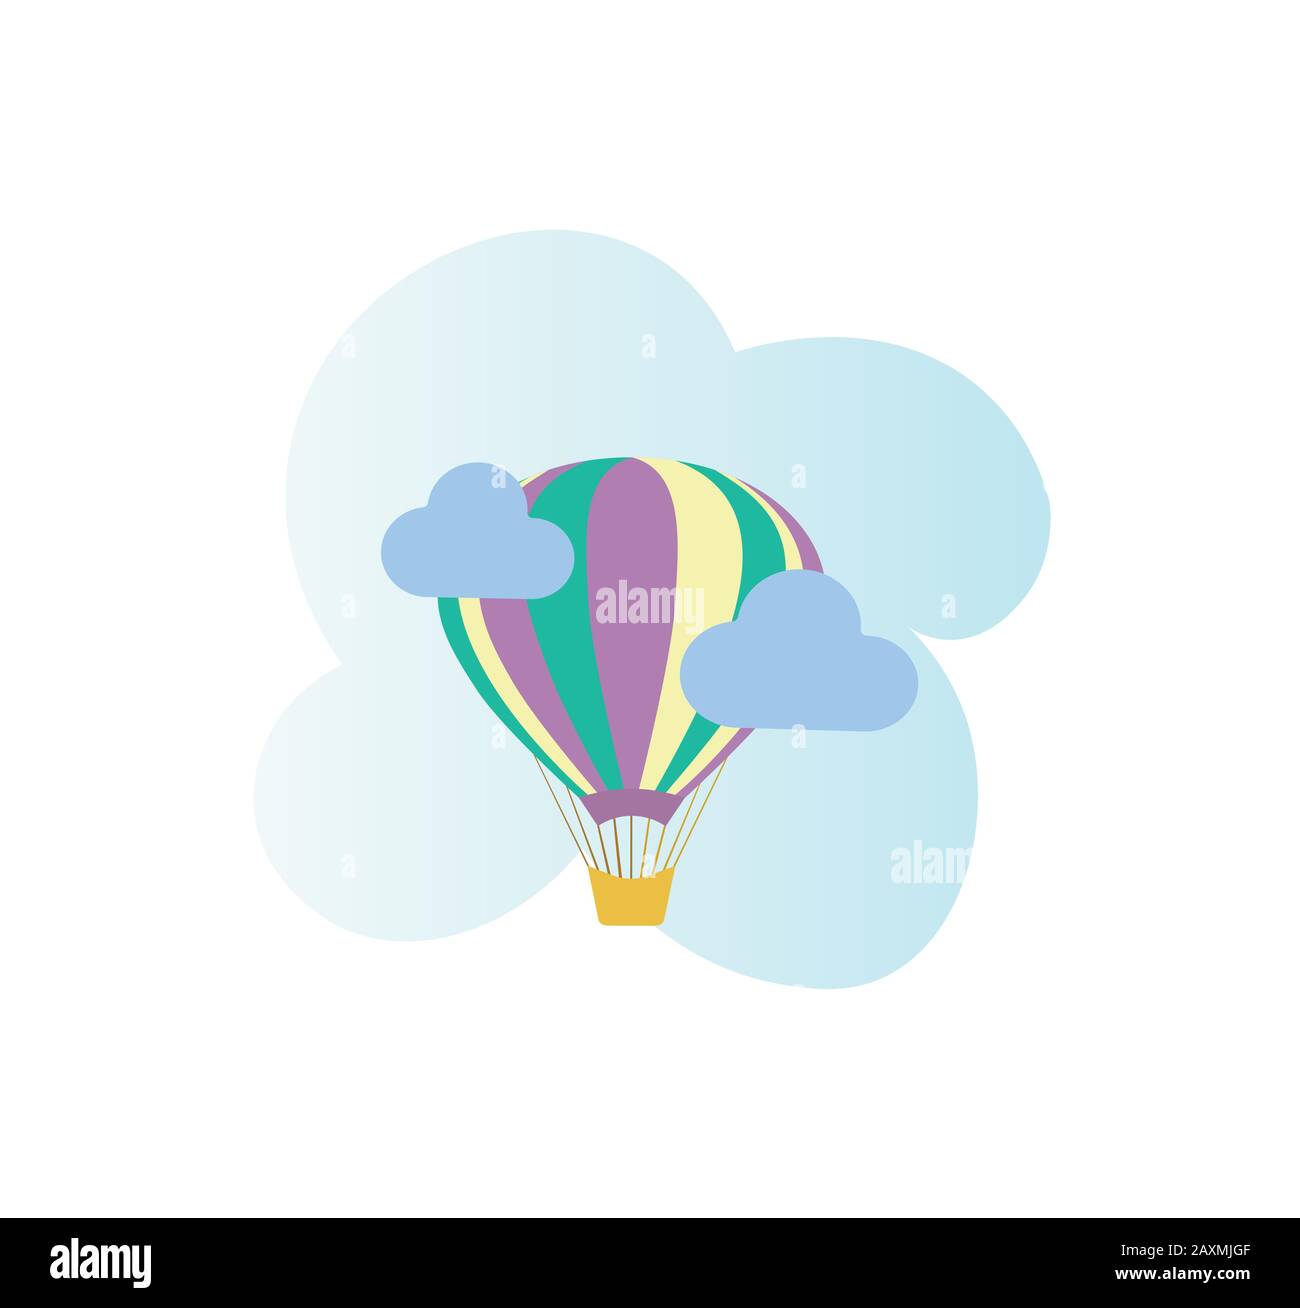 Beautiful flat balloon icon - adventure. Balloon and clouds on gradient background - beautiful children`s vector illustration Stock Vector